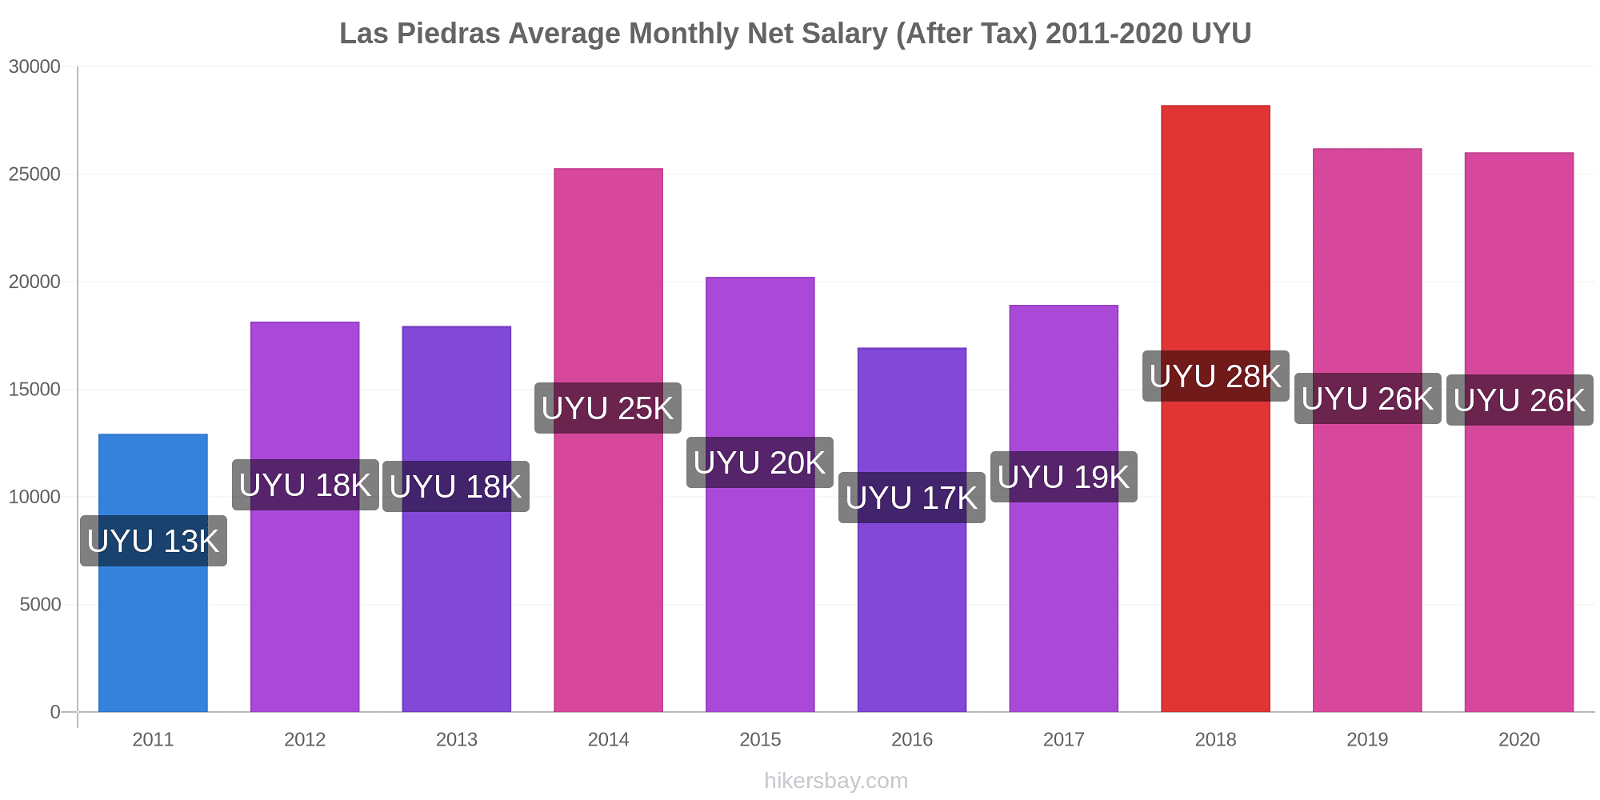 Las Piedras price changes Average Monthly Net Salary (After Tax) hikersbay.com